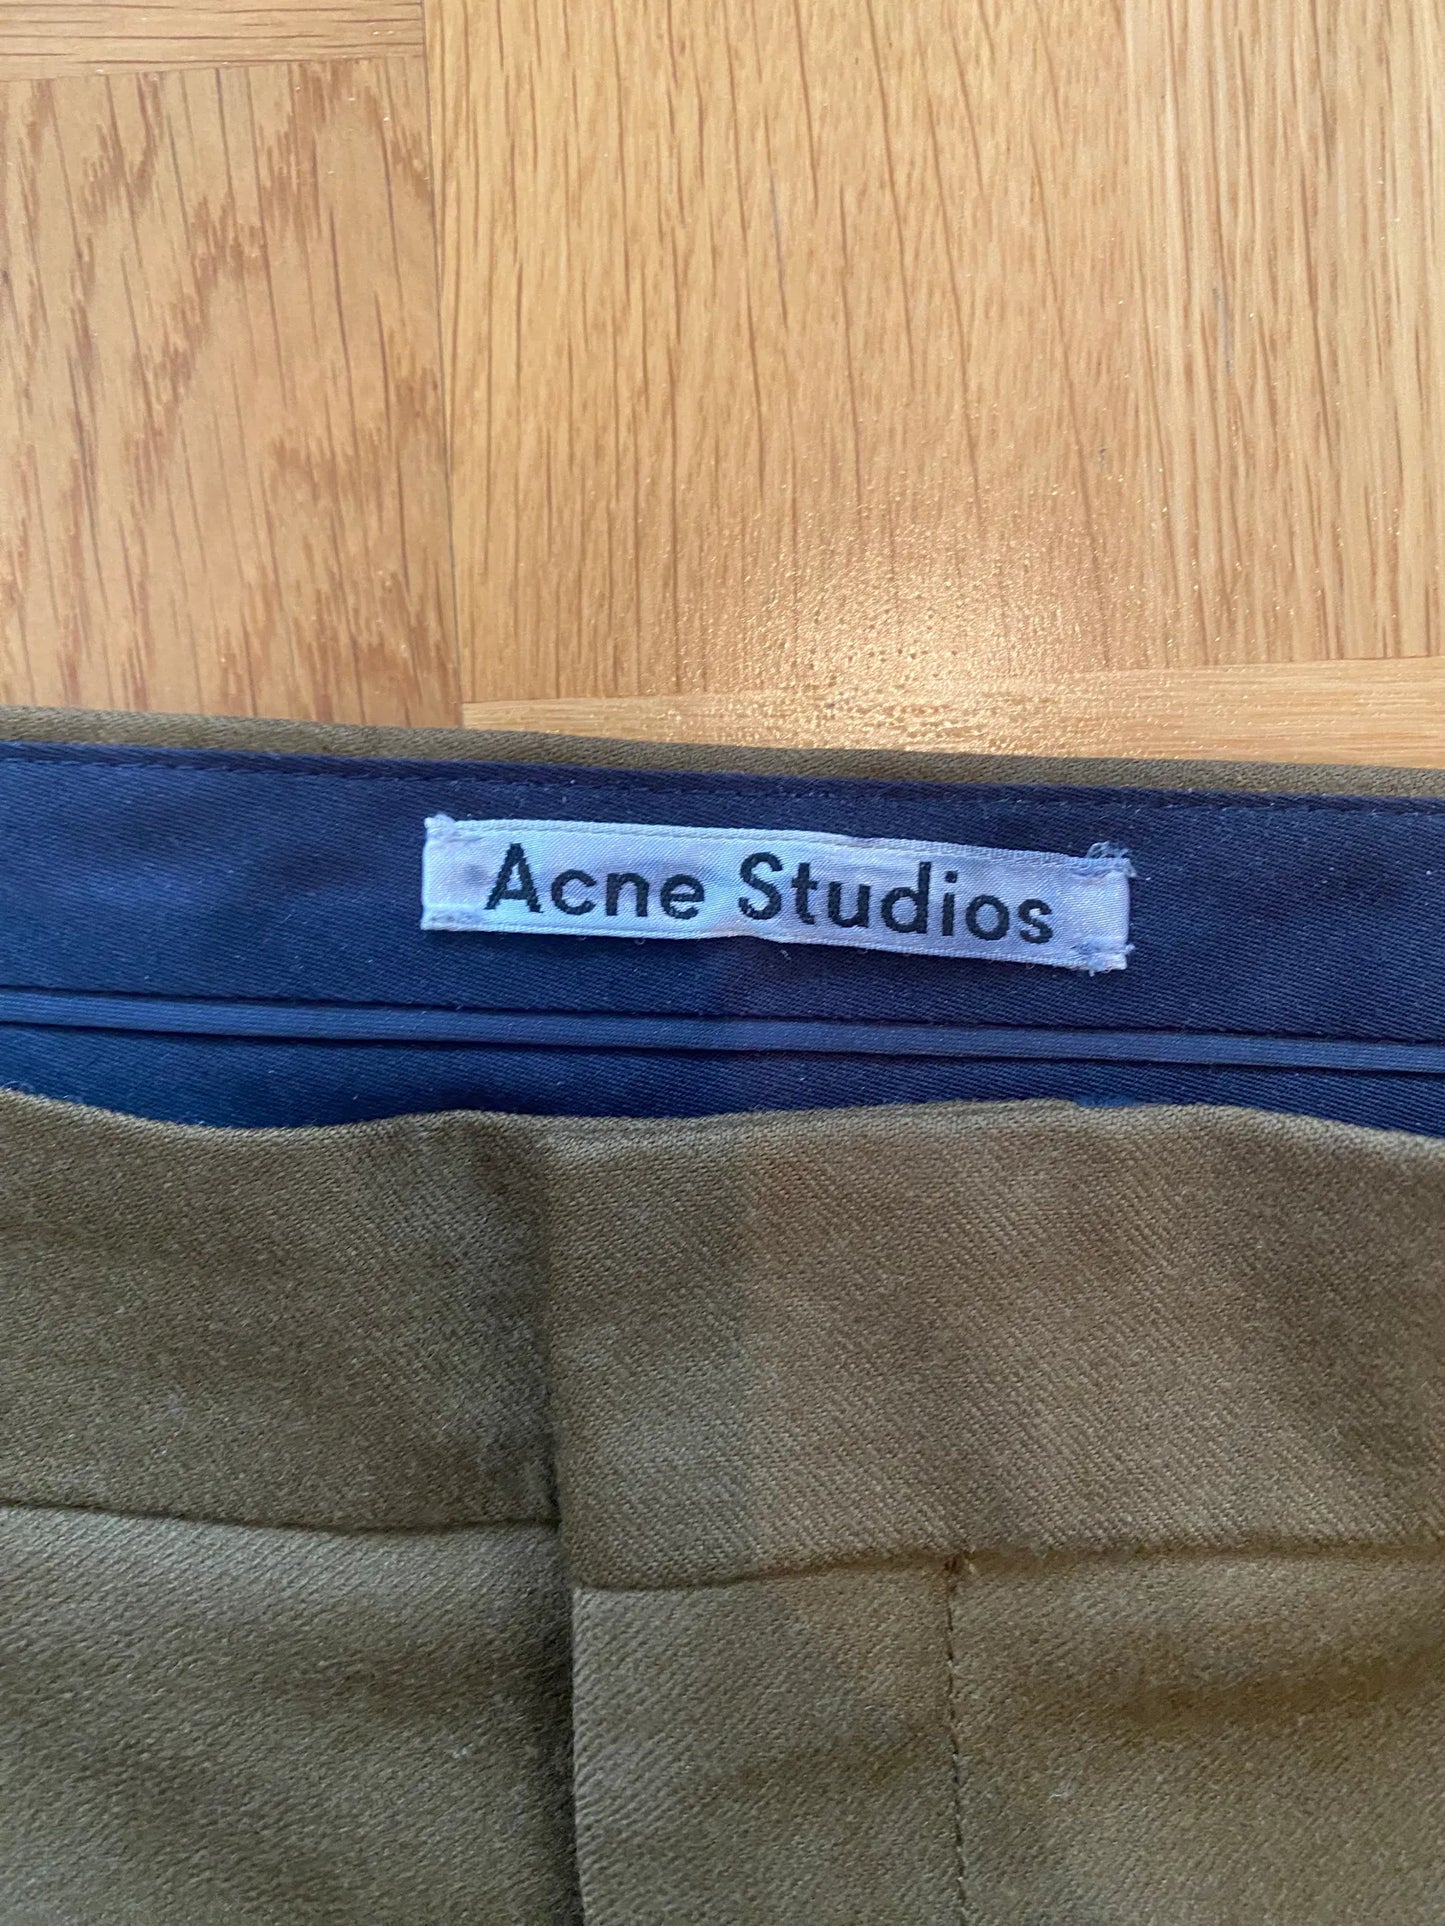 Acne Studios Pro Wool-kostymbyxor